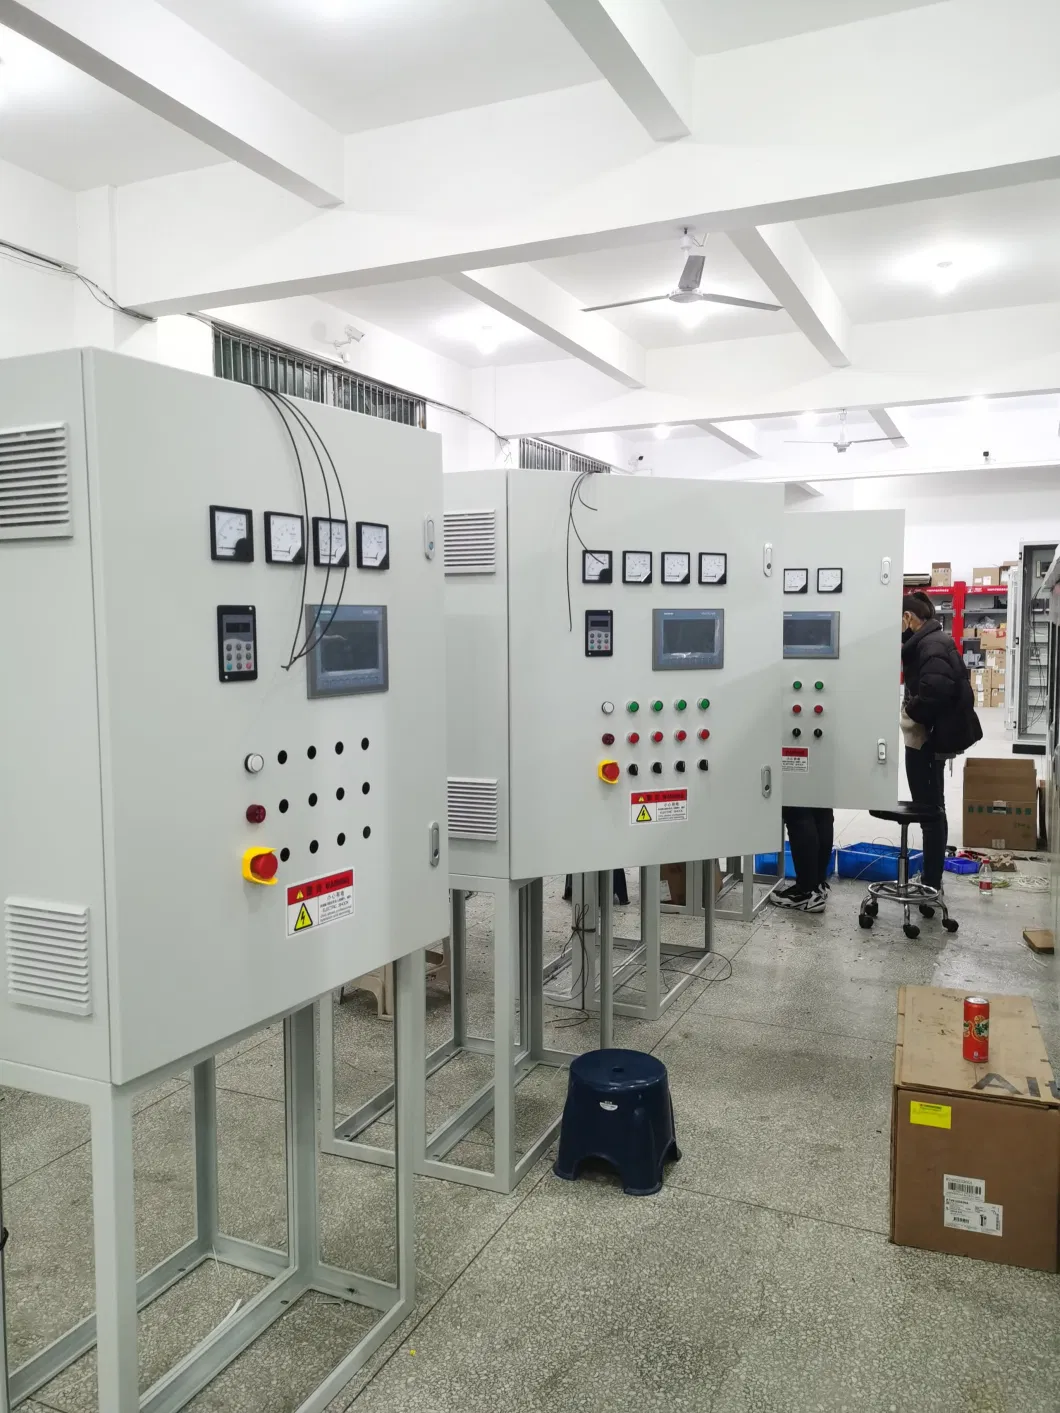 5kw 380V Constant Pressure Water Pump Siemens PLC Program Control Panel